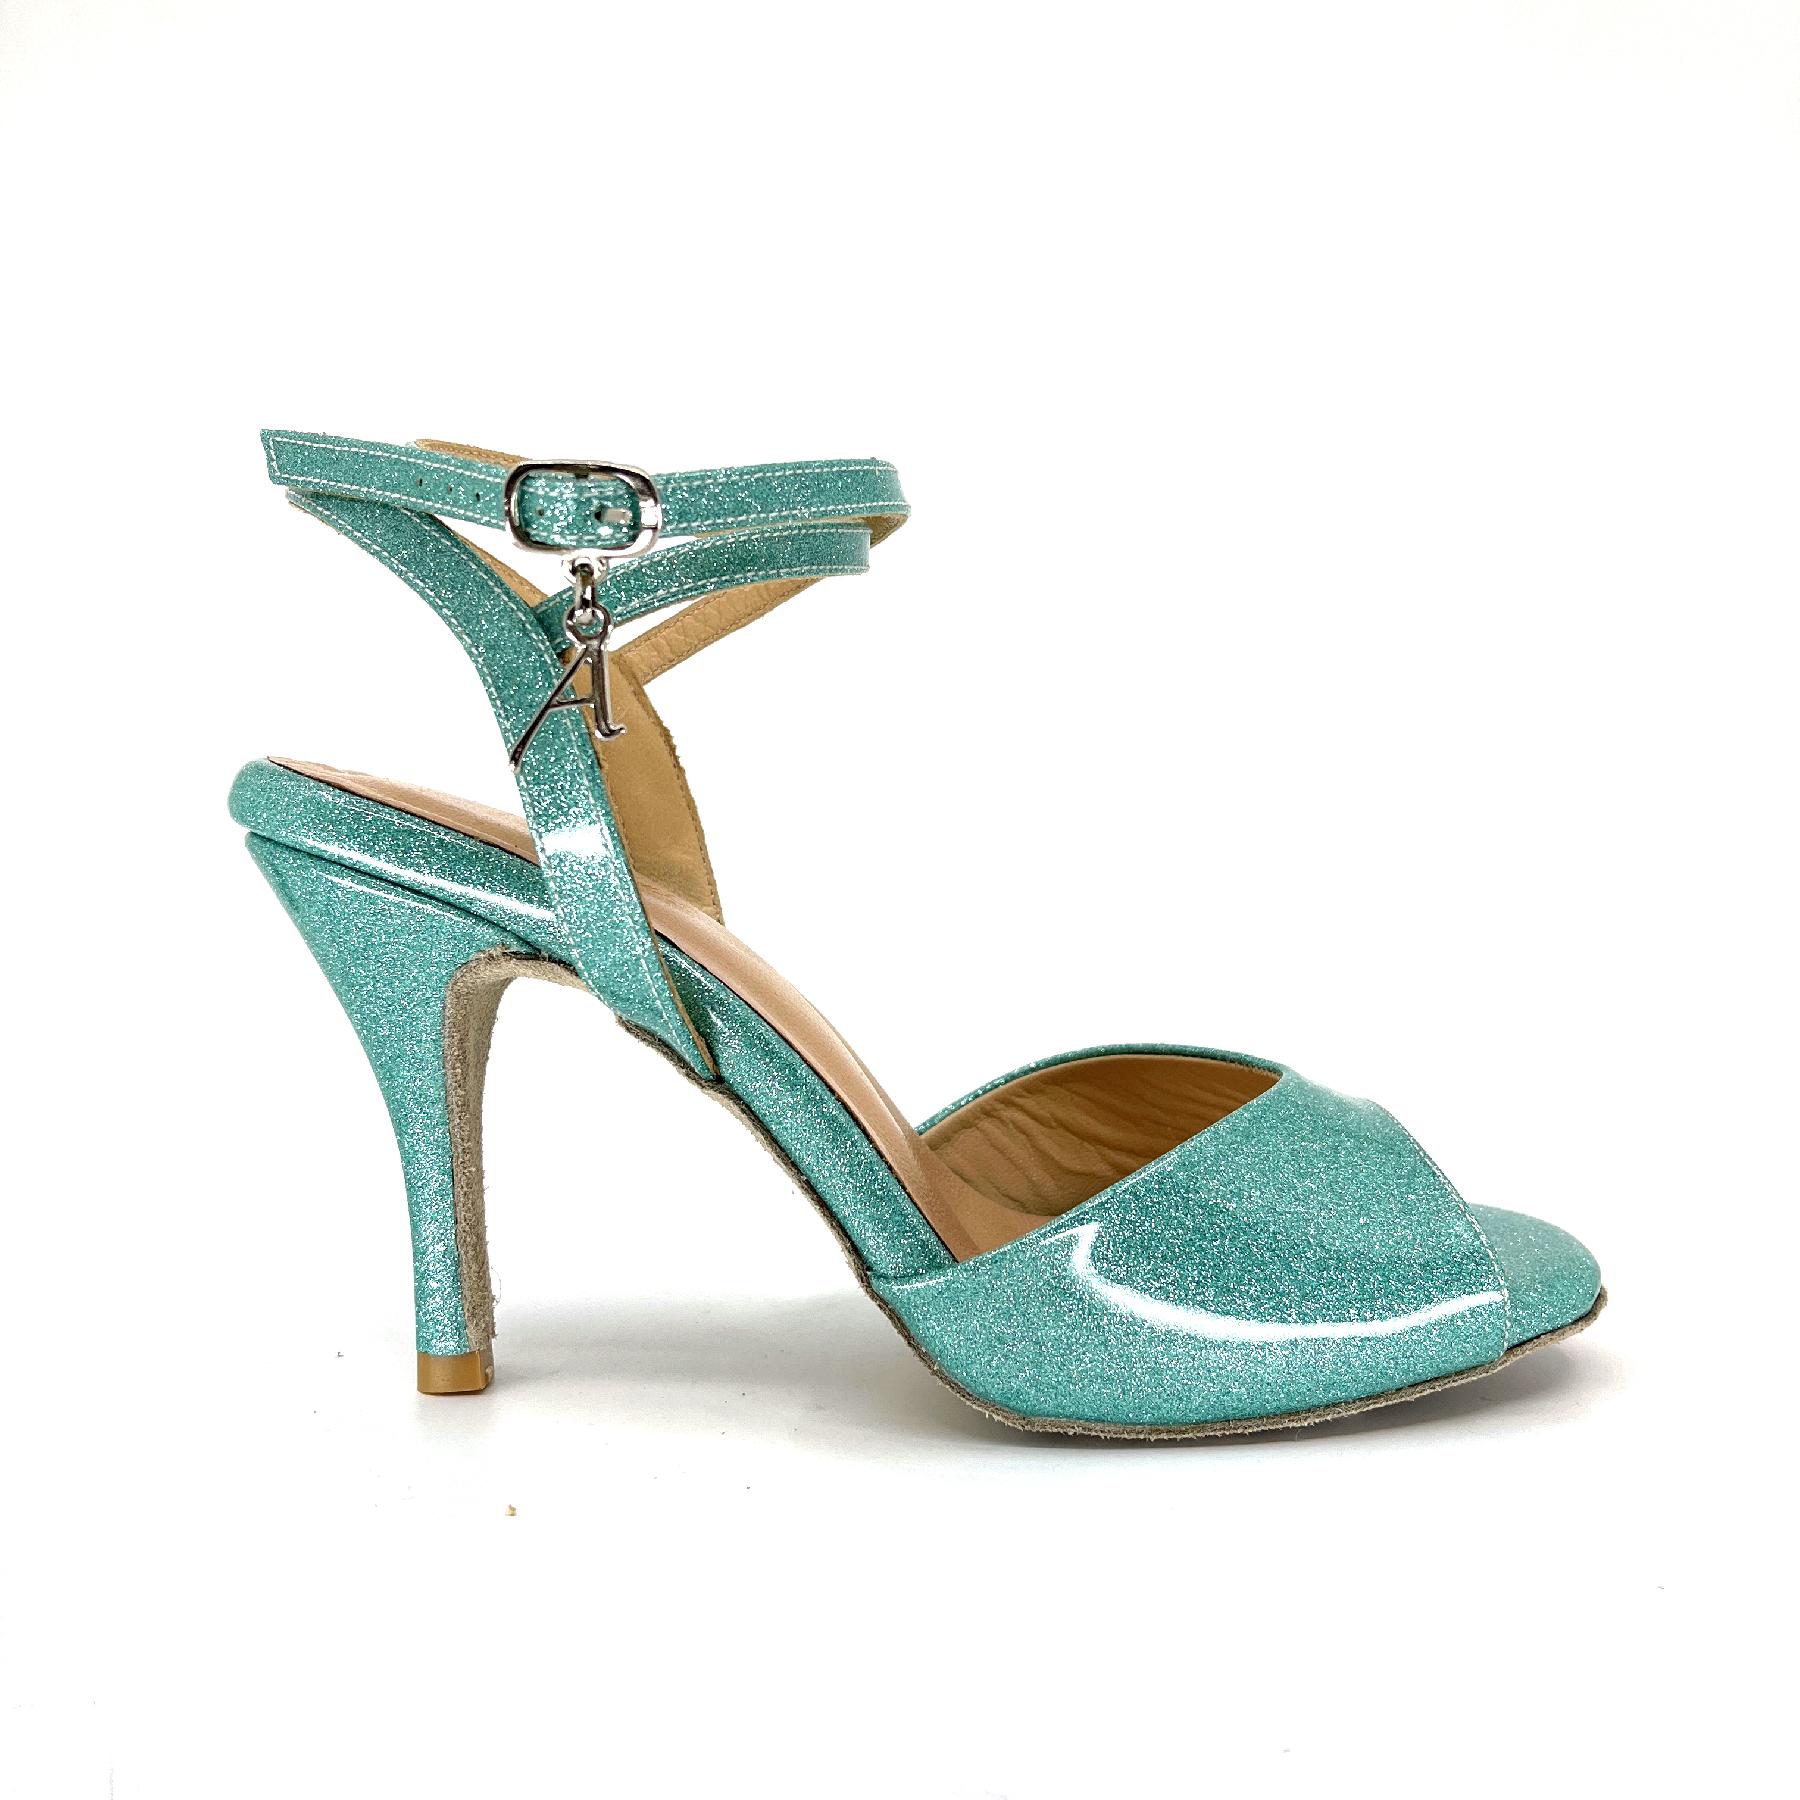 Nine West strappy, turquoise heels 👠 | Heels, Turquoise heels, Nine west  shoes